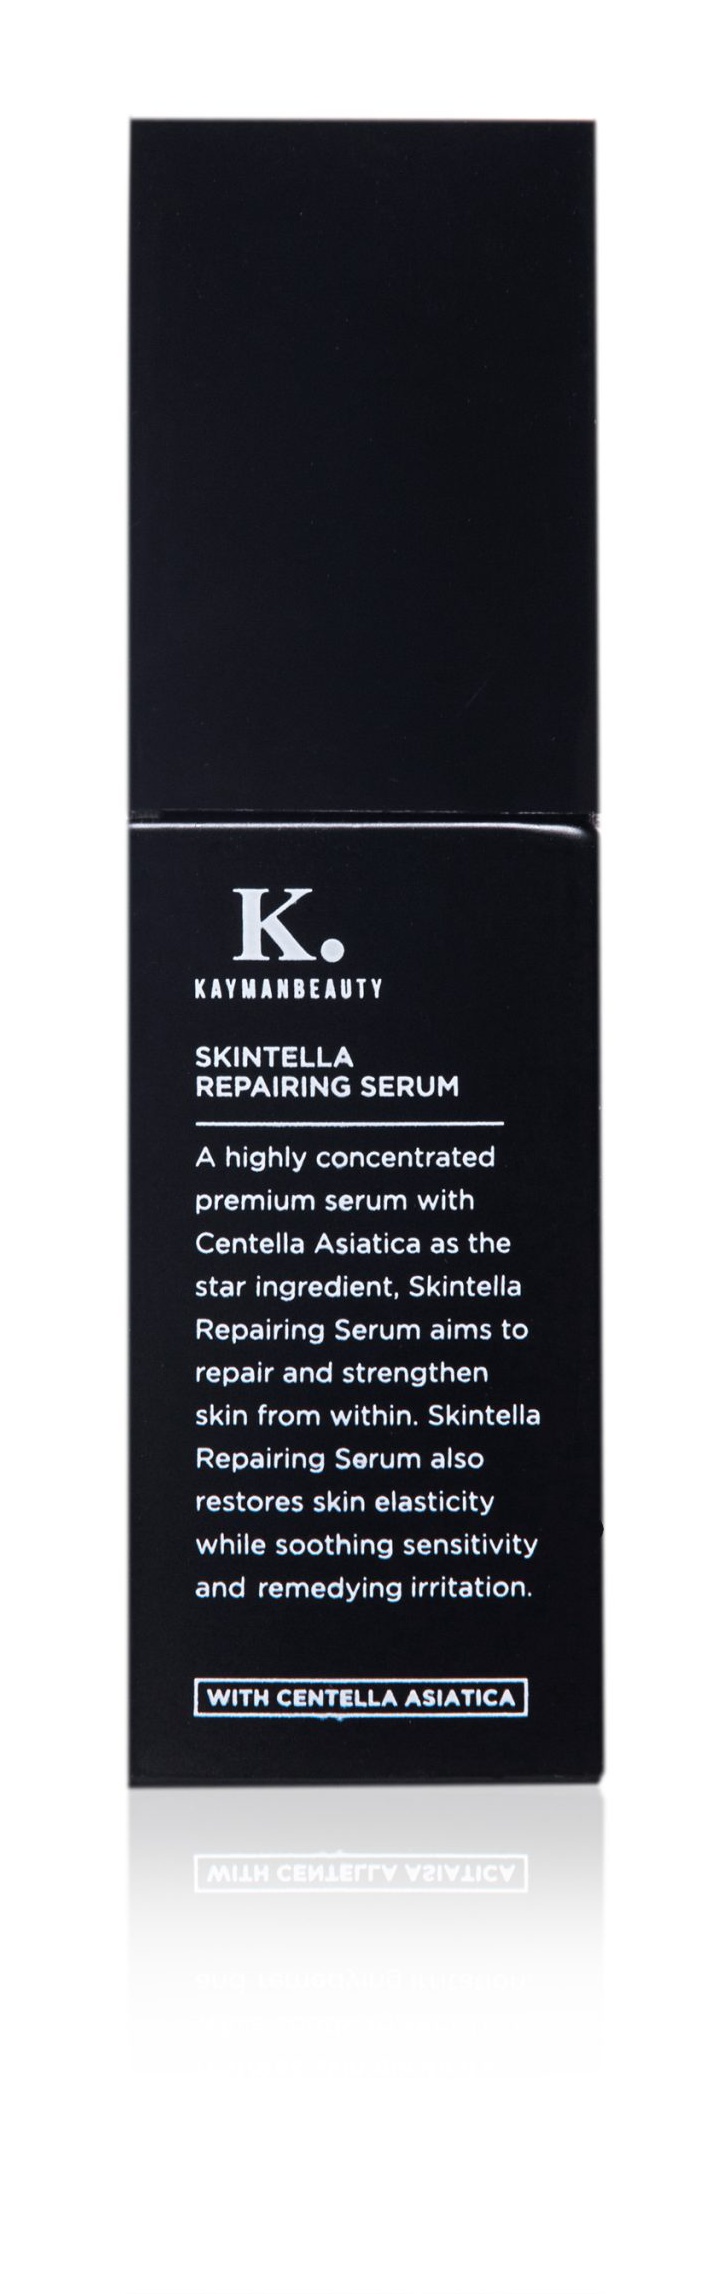 Kayman Beauty Skintella Repairing Serum